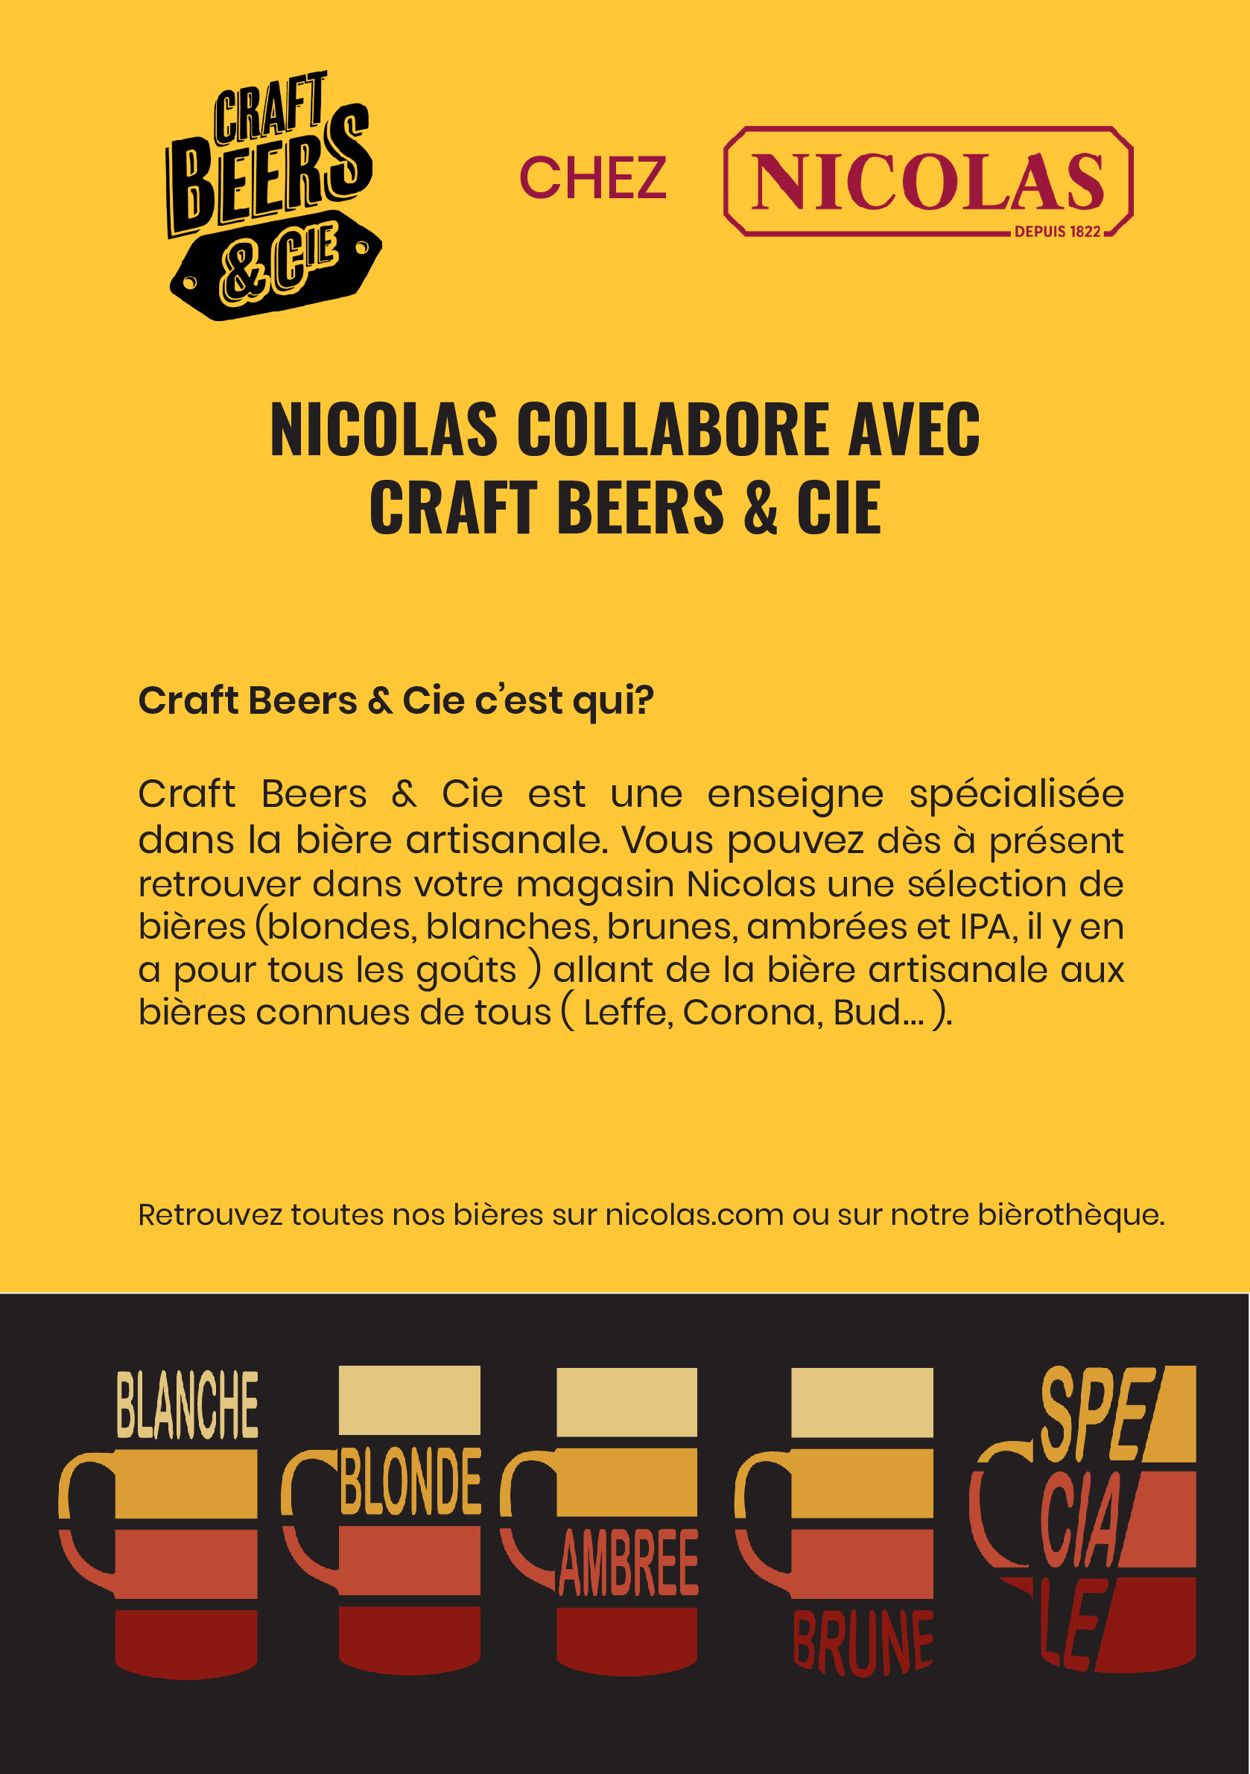 Nicolas Catalogue du 21.04.2022